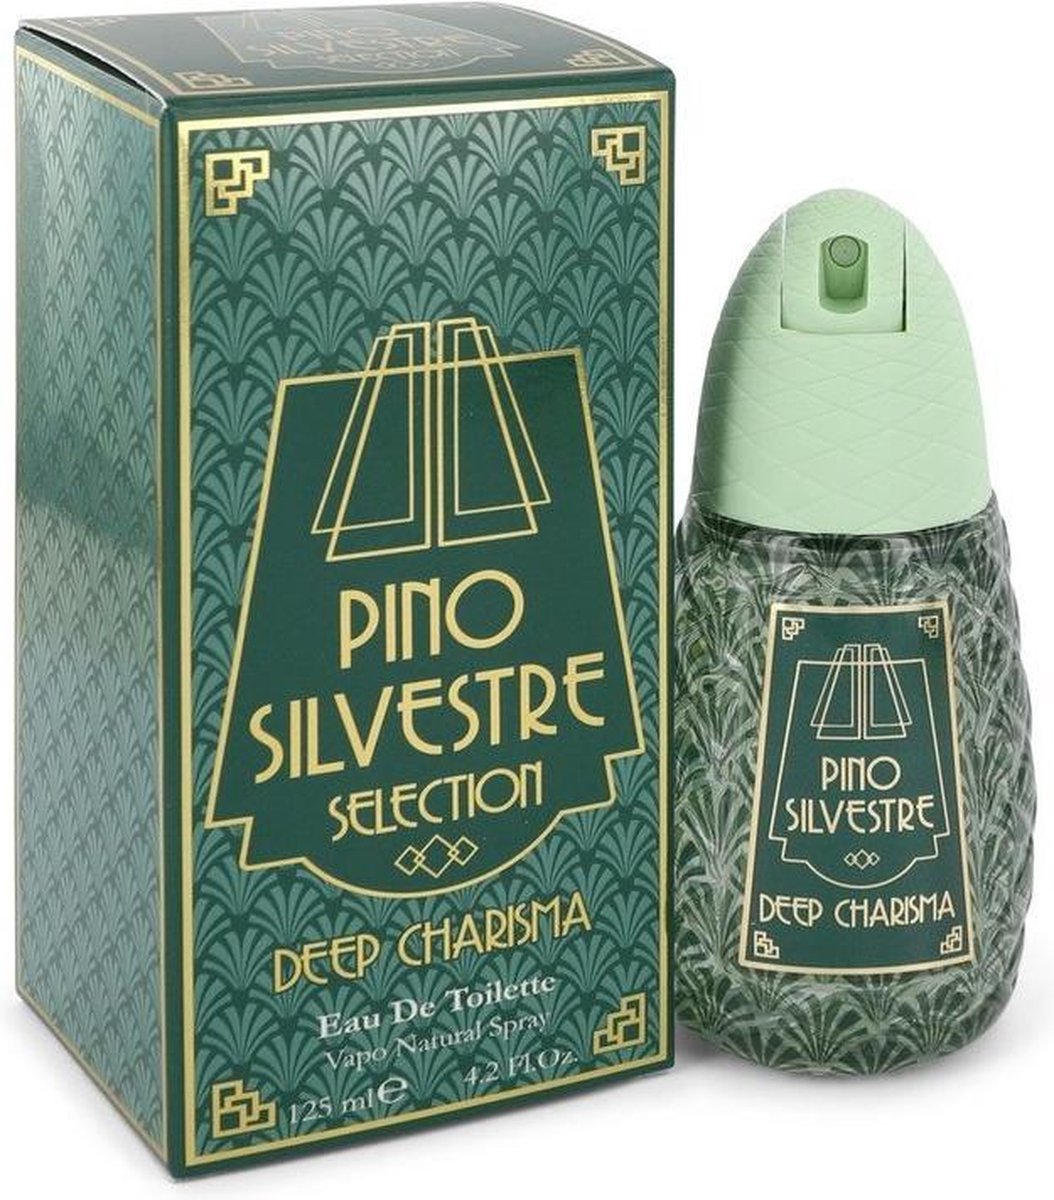 Pino Silvestre Selection Deep Charisma - Eau de toilette spray - 125 ml